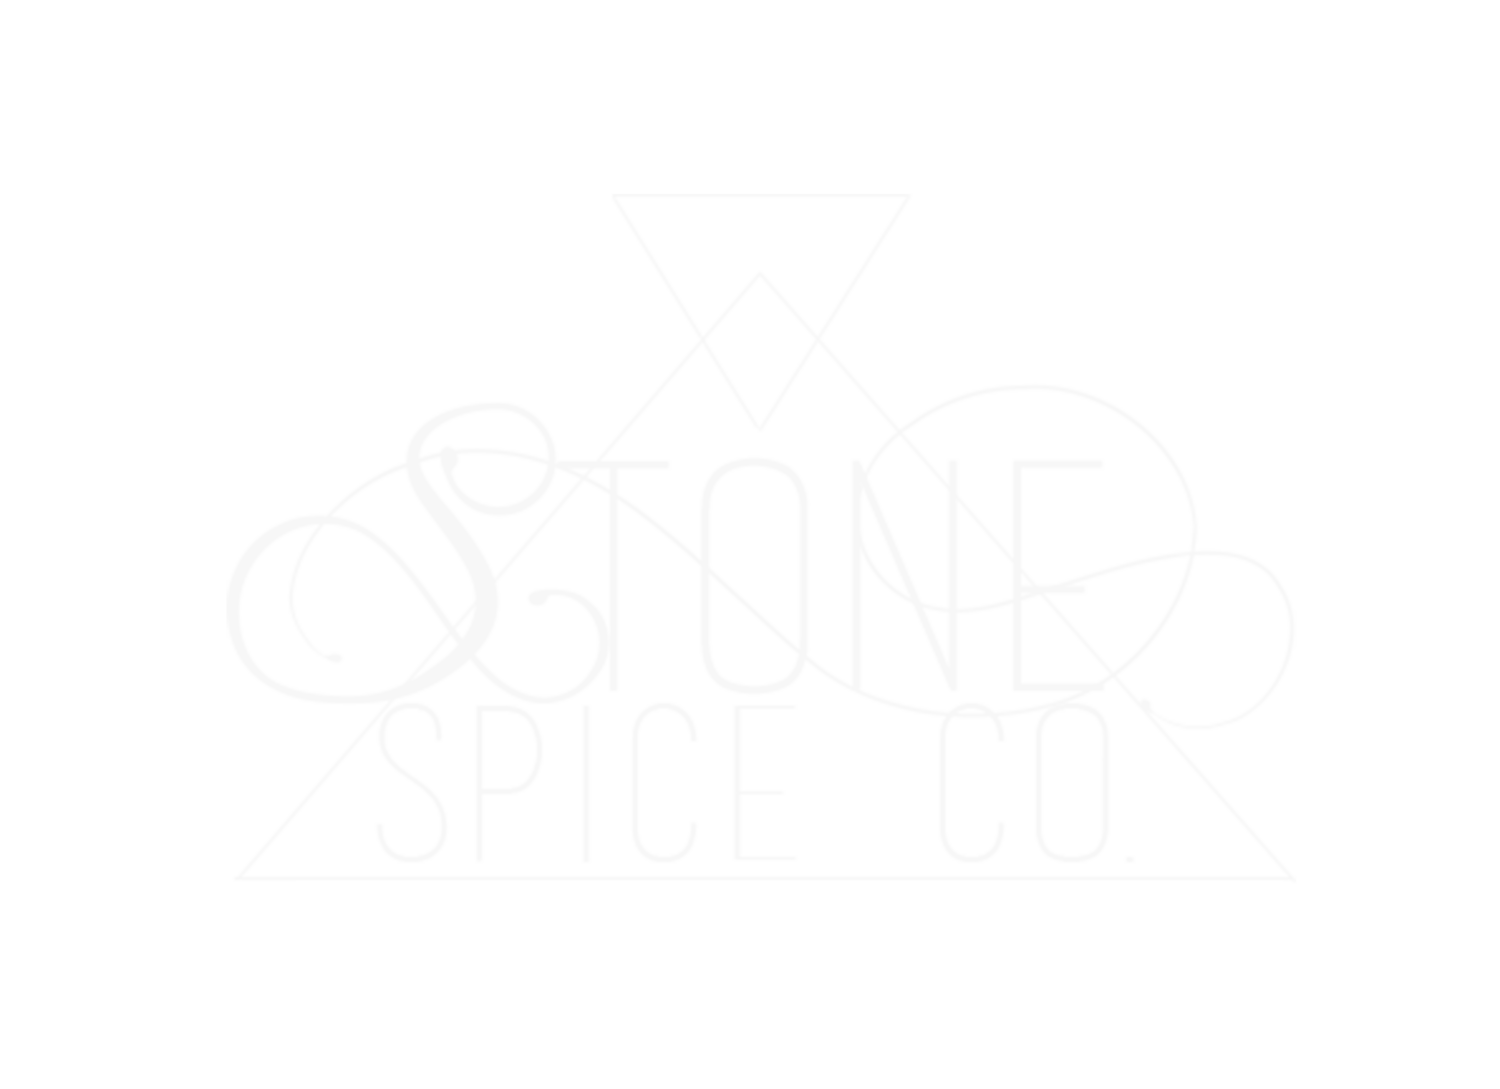 Stone Spice Co.